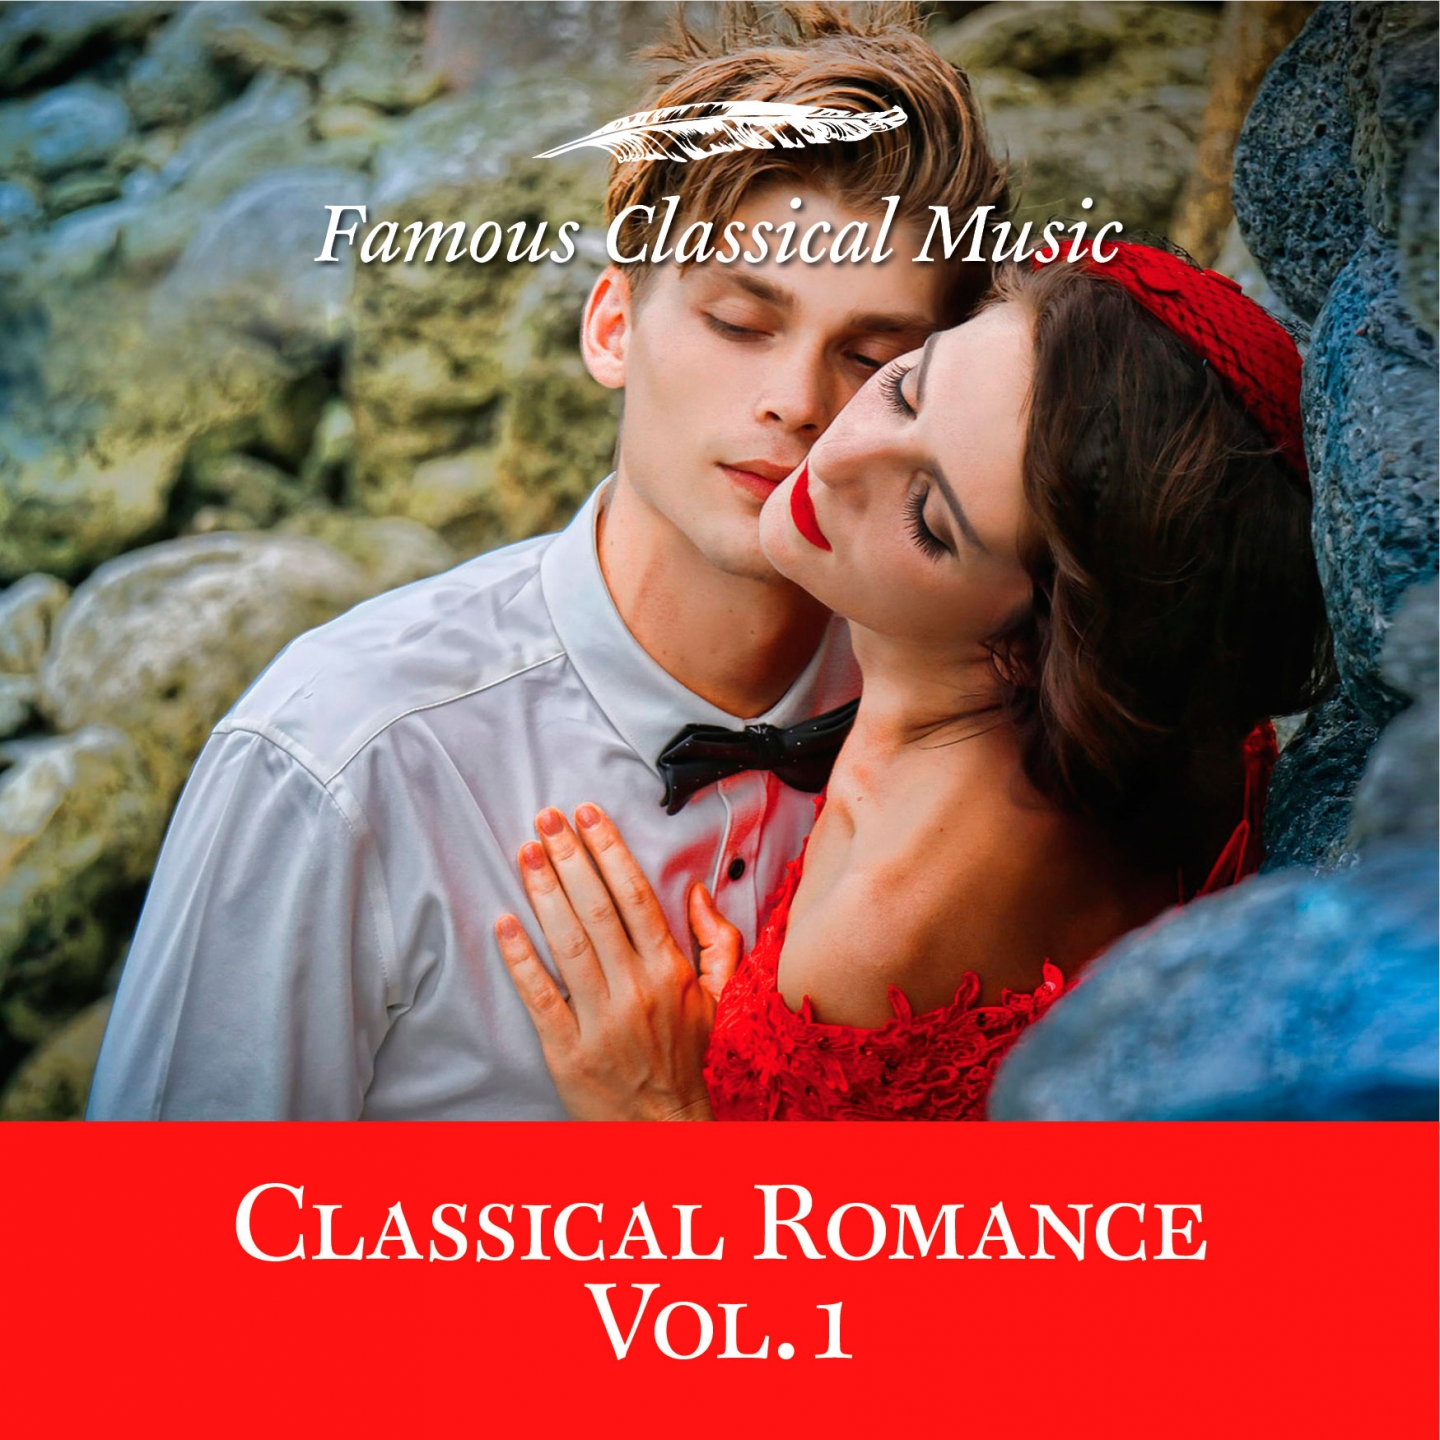 Classical Romance, Vol. 1 (Famous Classical Music)